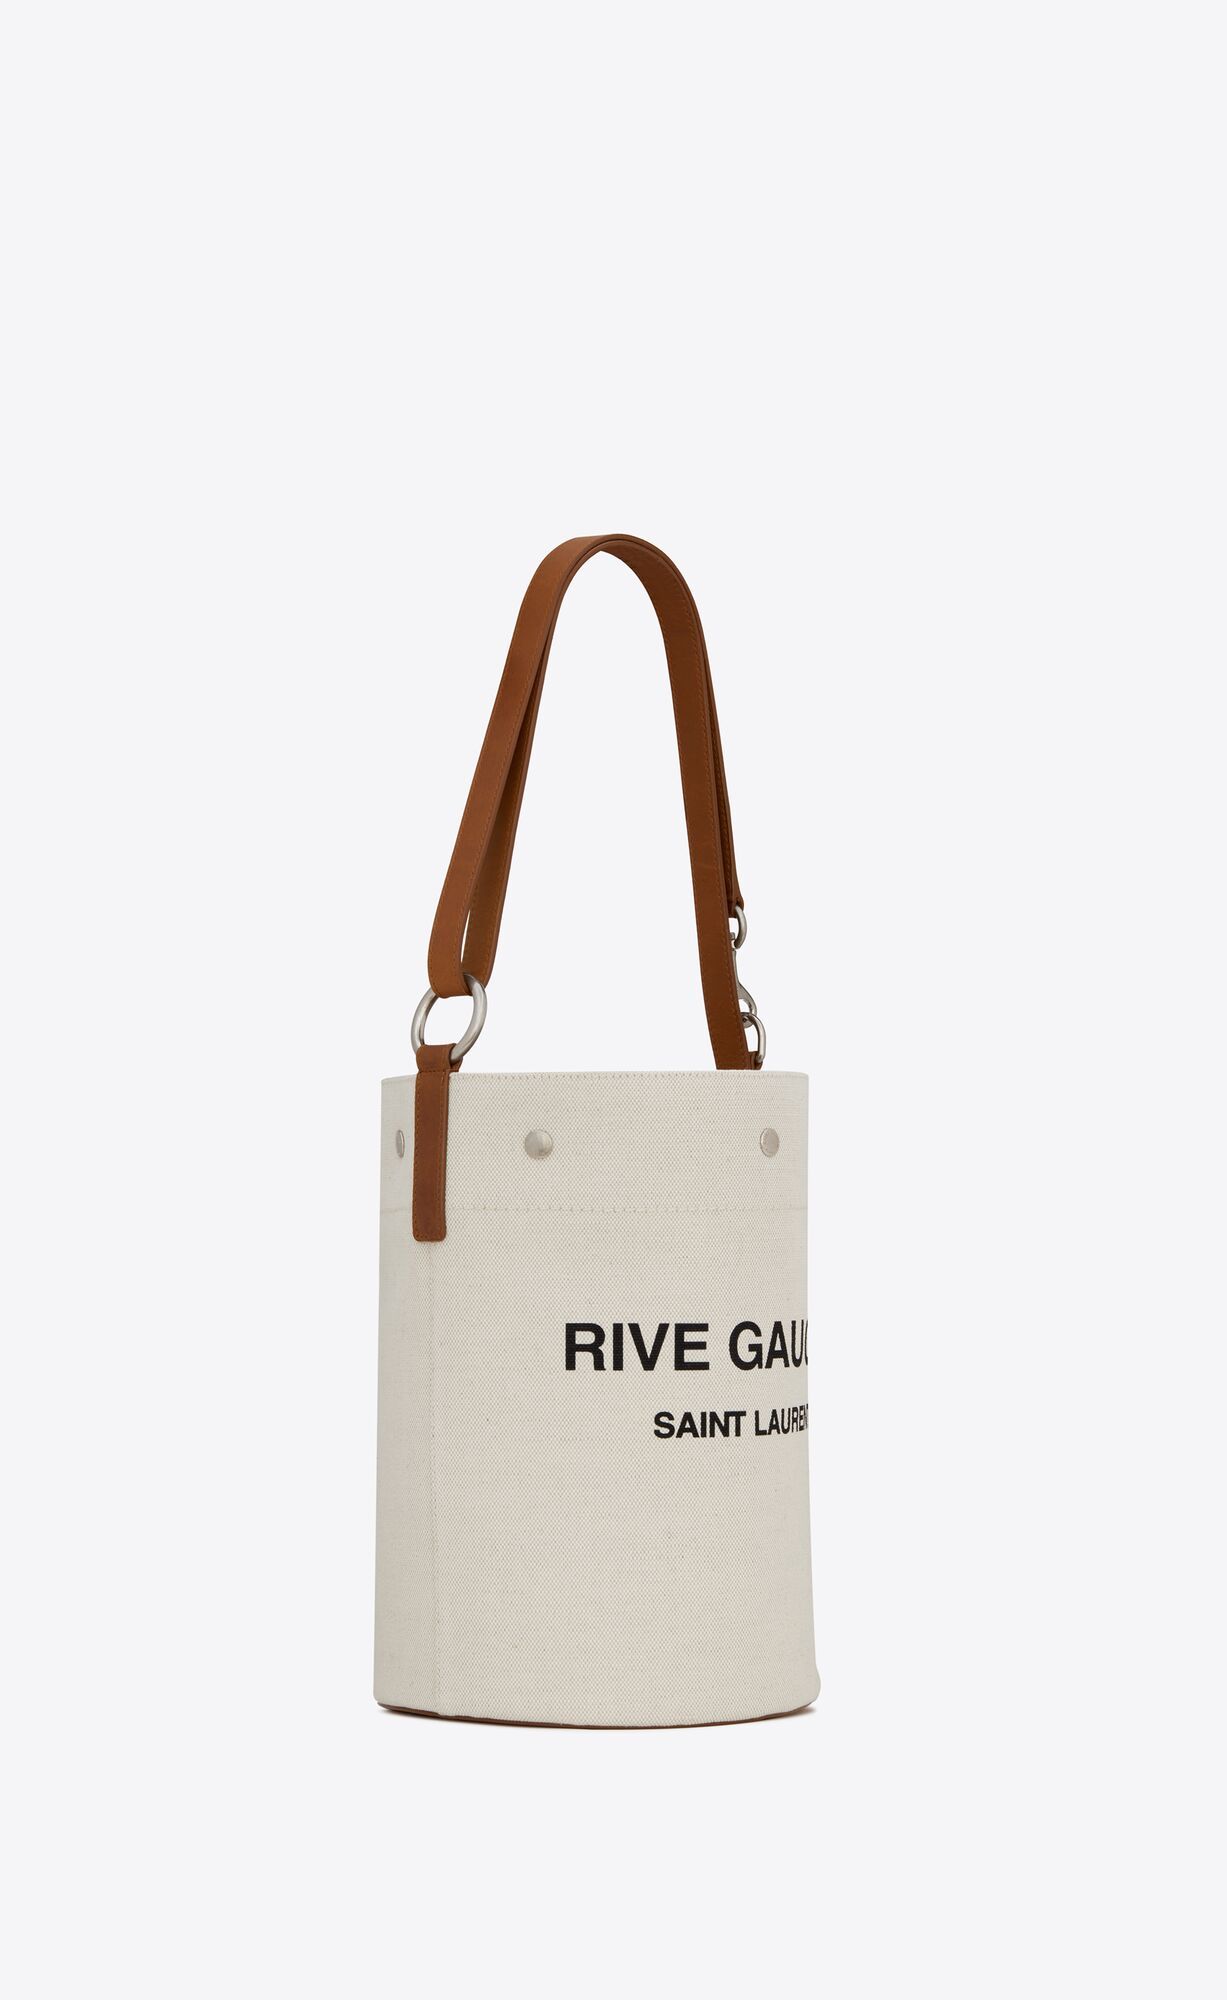 RIVE GAUCHE BUCKET BAG IN LINEN | Saint Laurent __locale_country__ | YSL.com | Saint Laurent Inc. (Global)